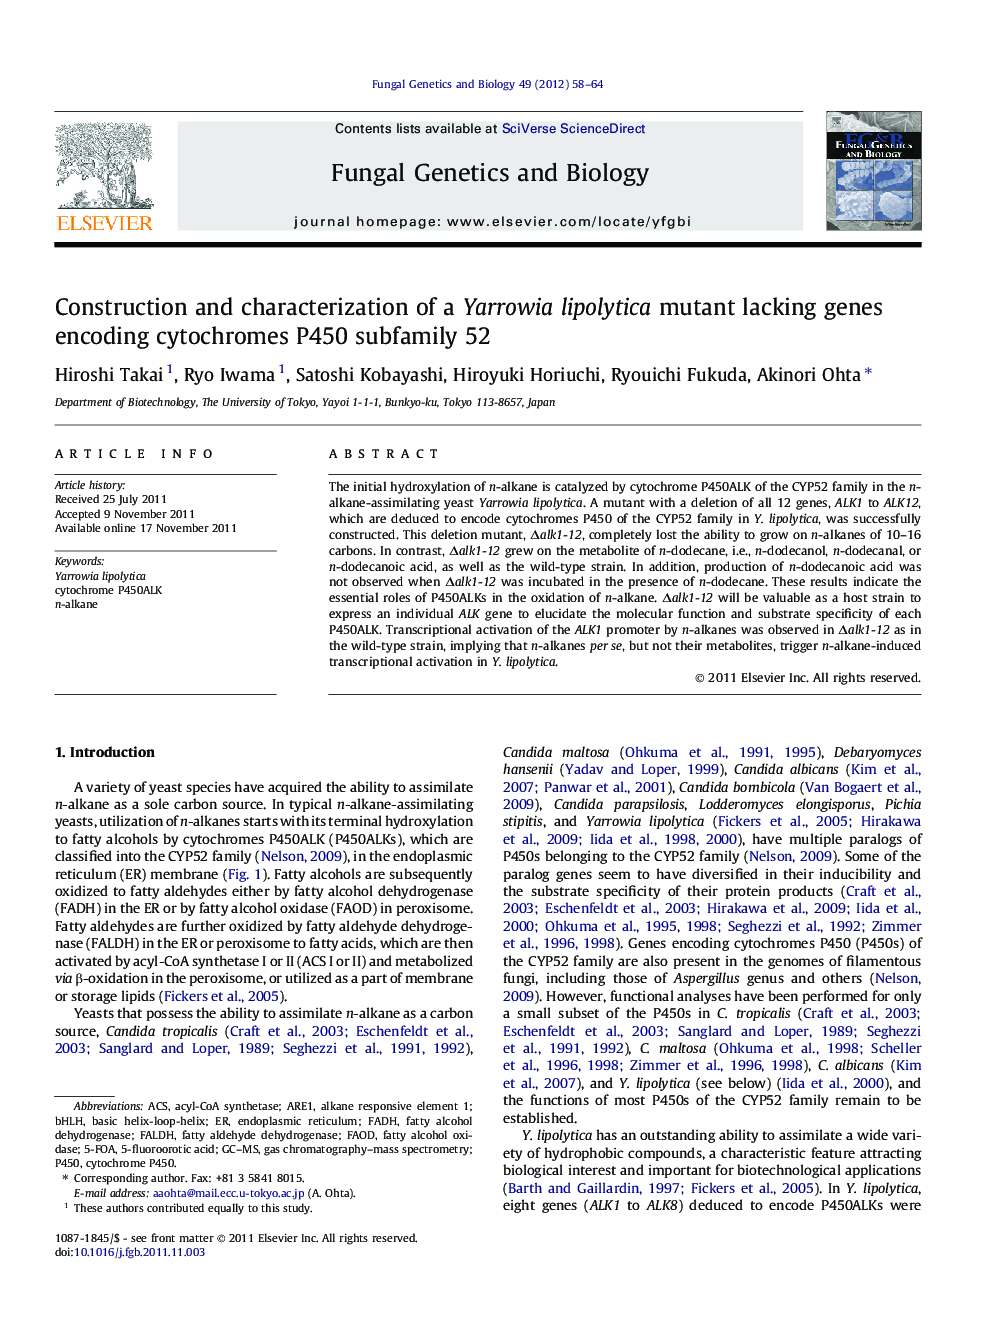 Construction and characterization of a Yarrowia lipolytica mutant lacking genes encoding cytochromes P450 subfamily 52